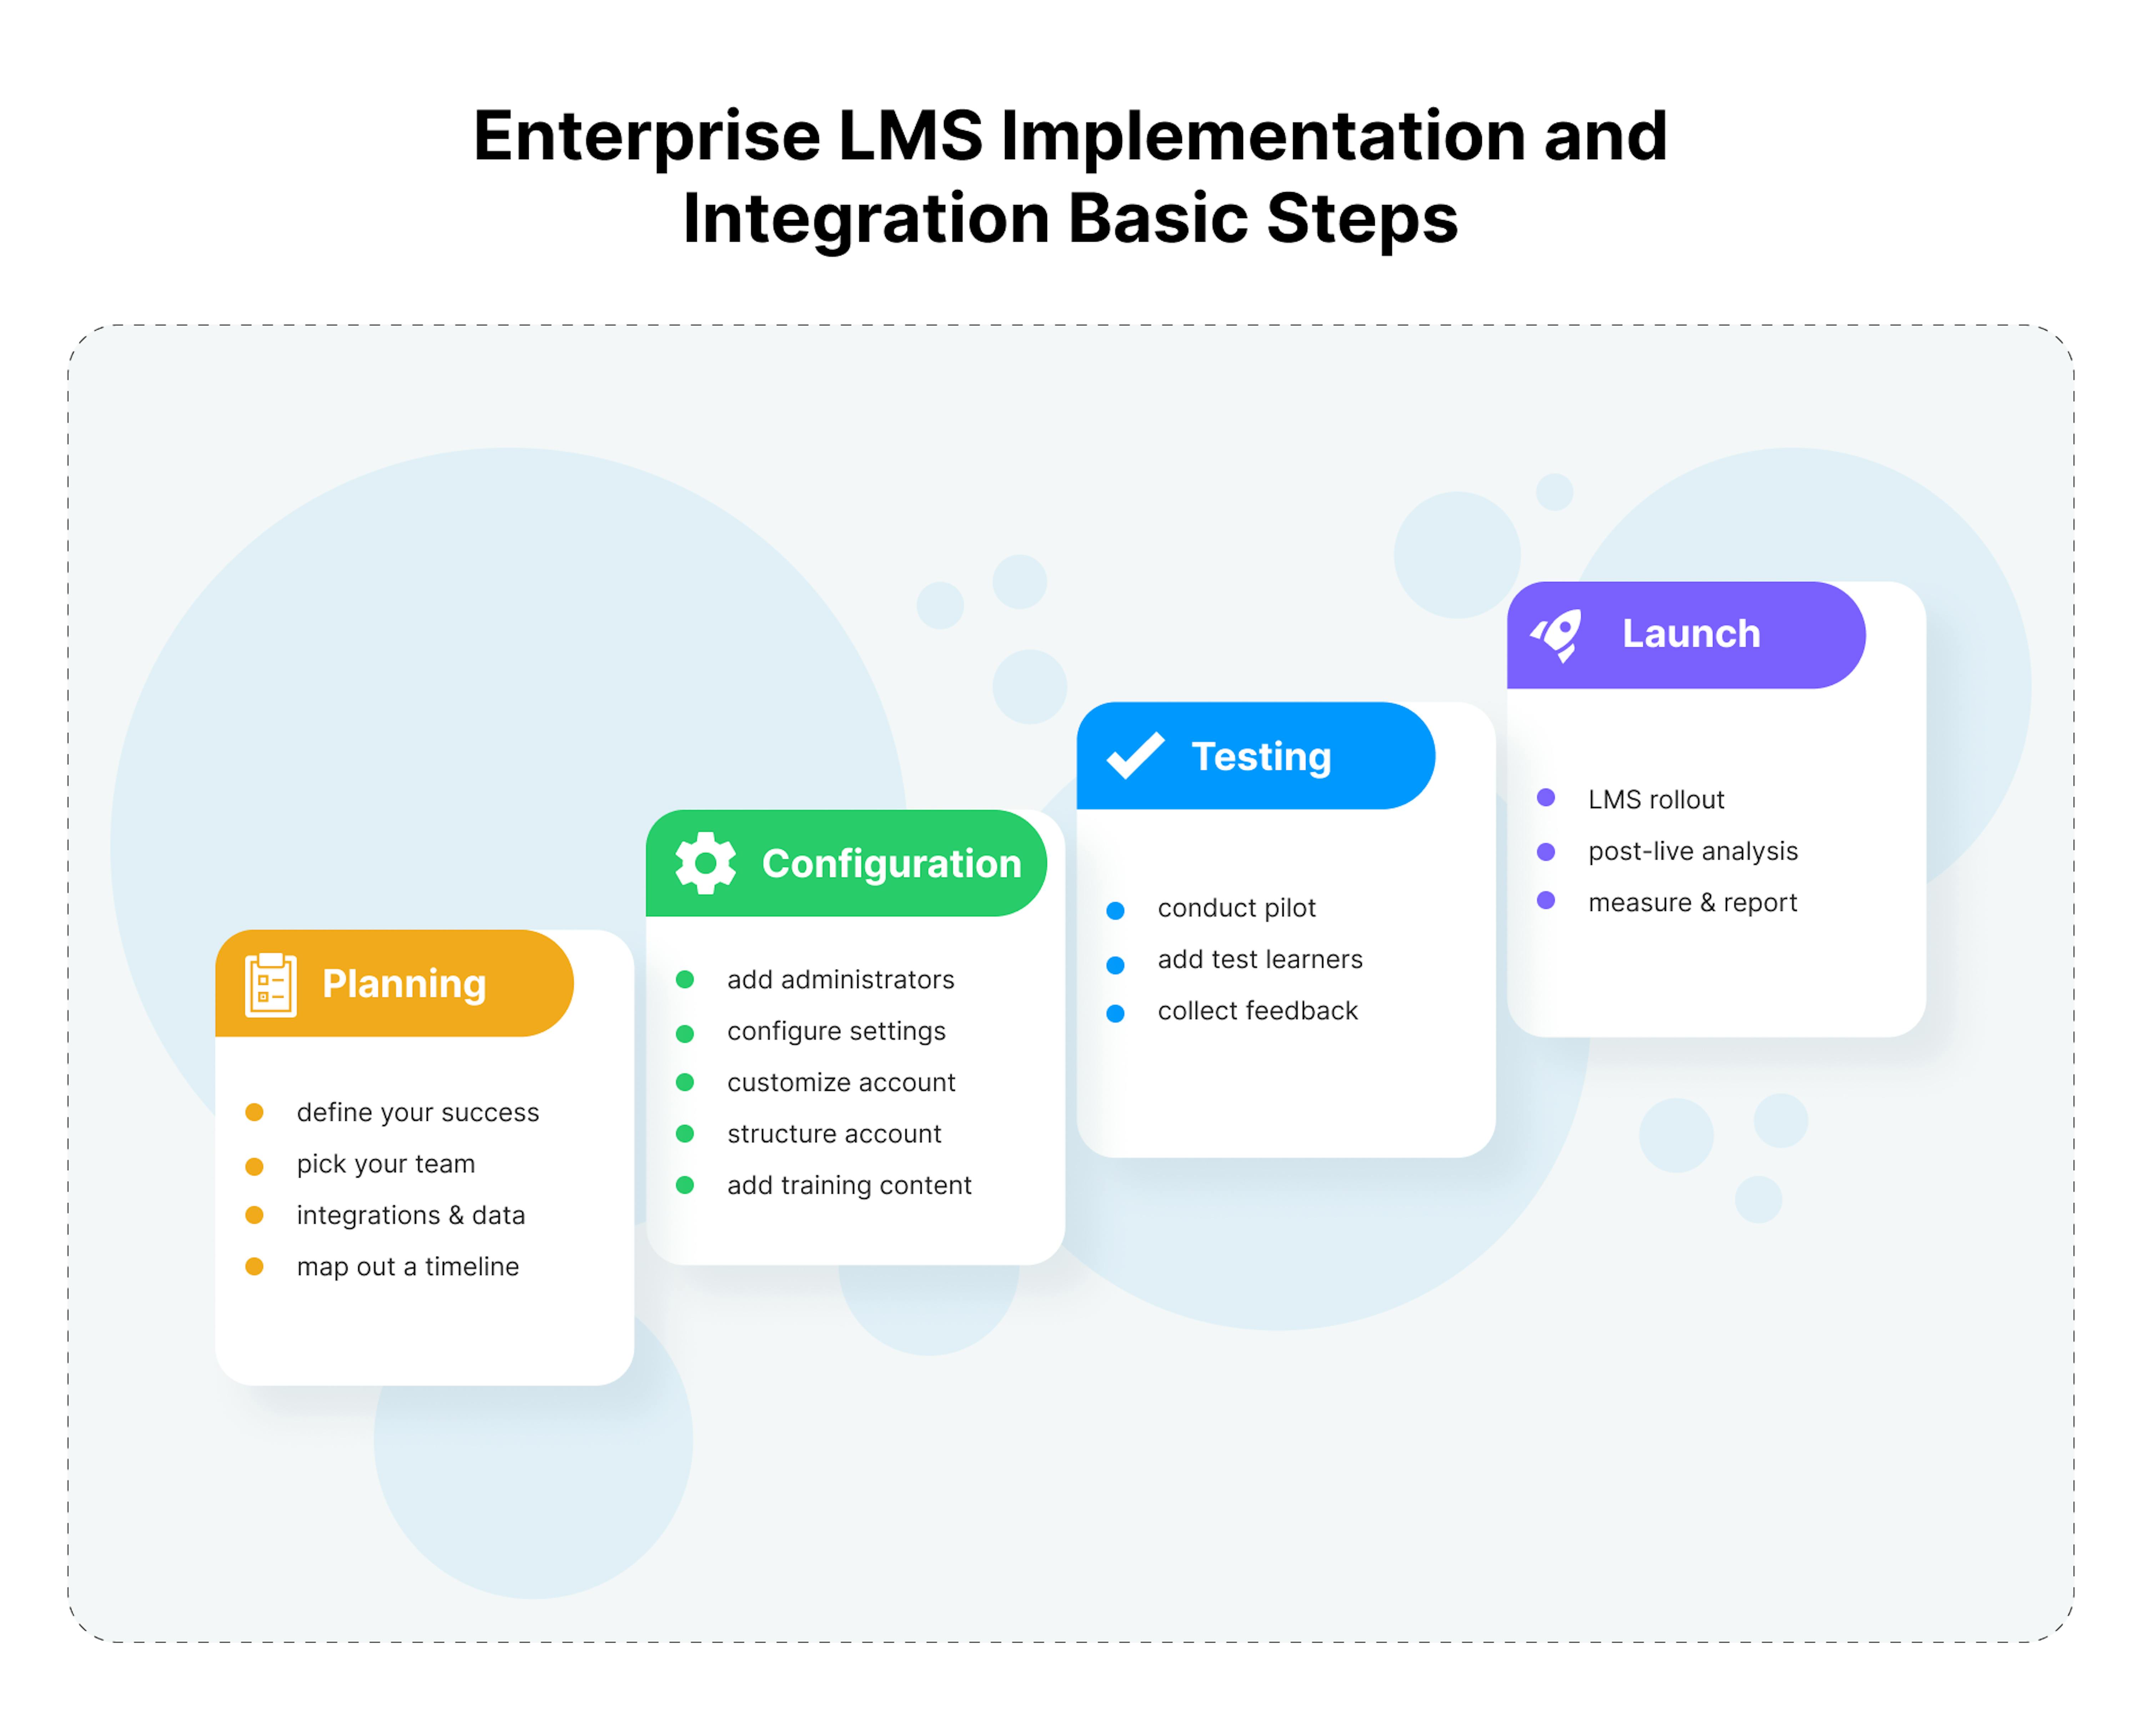 Implementation and integration of an enterprise LMS